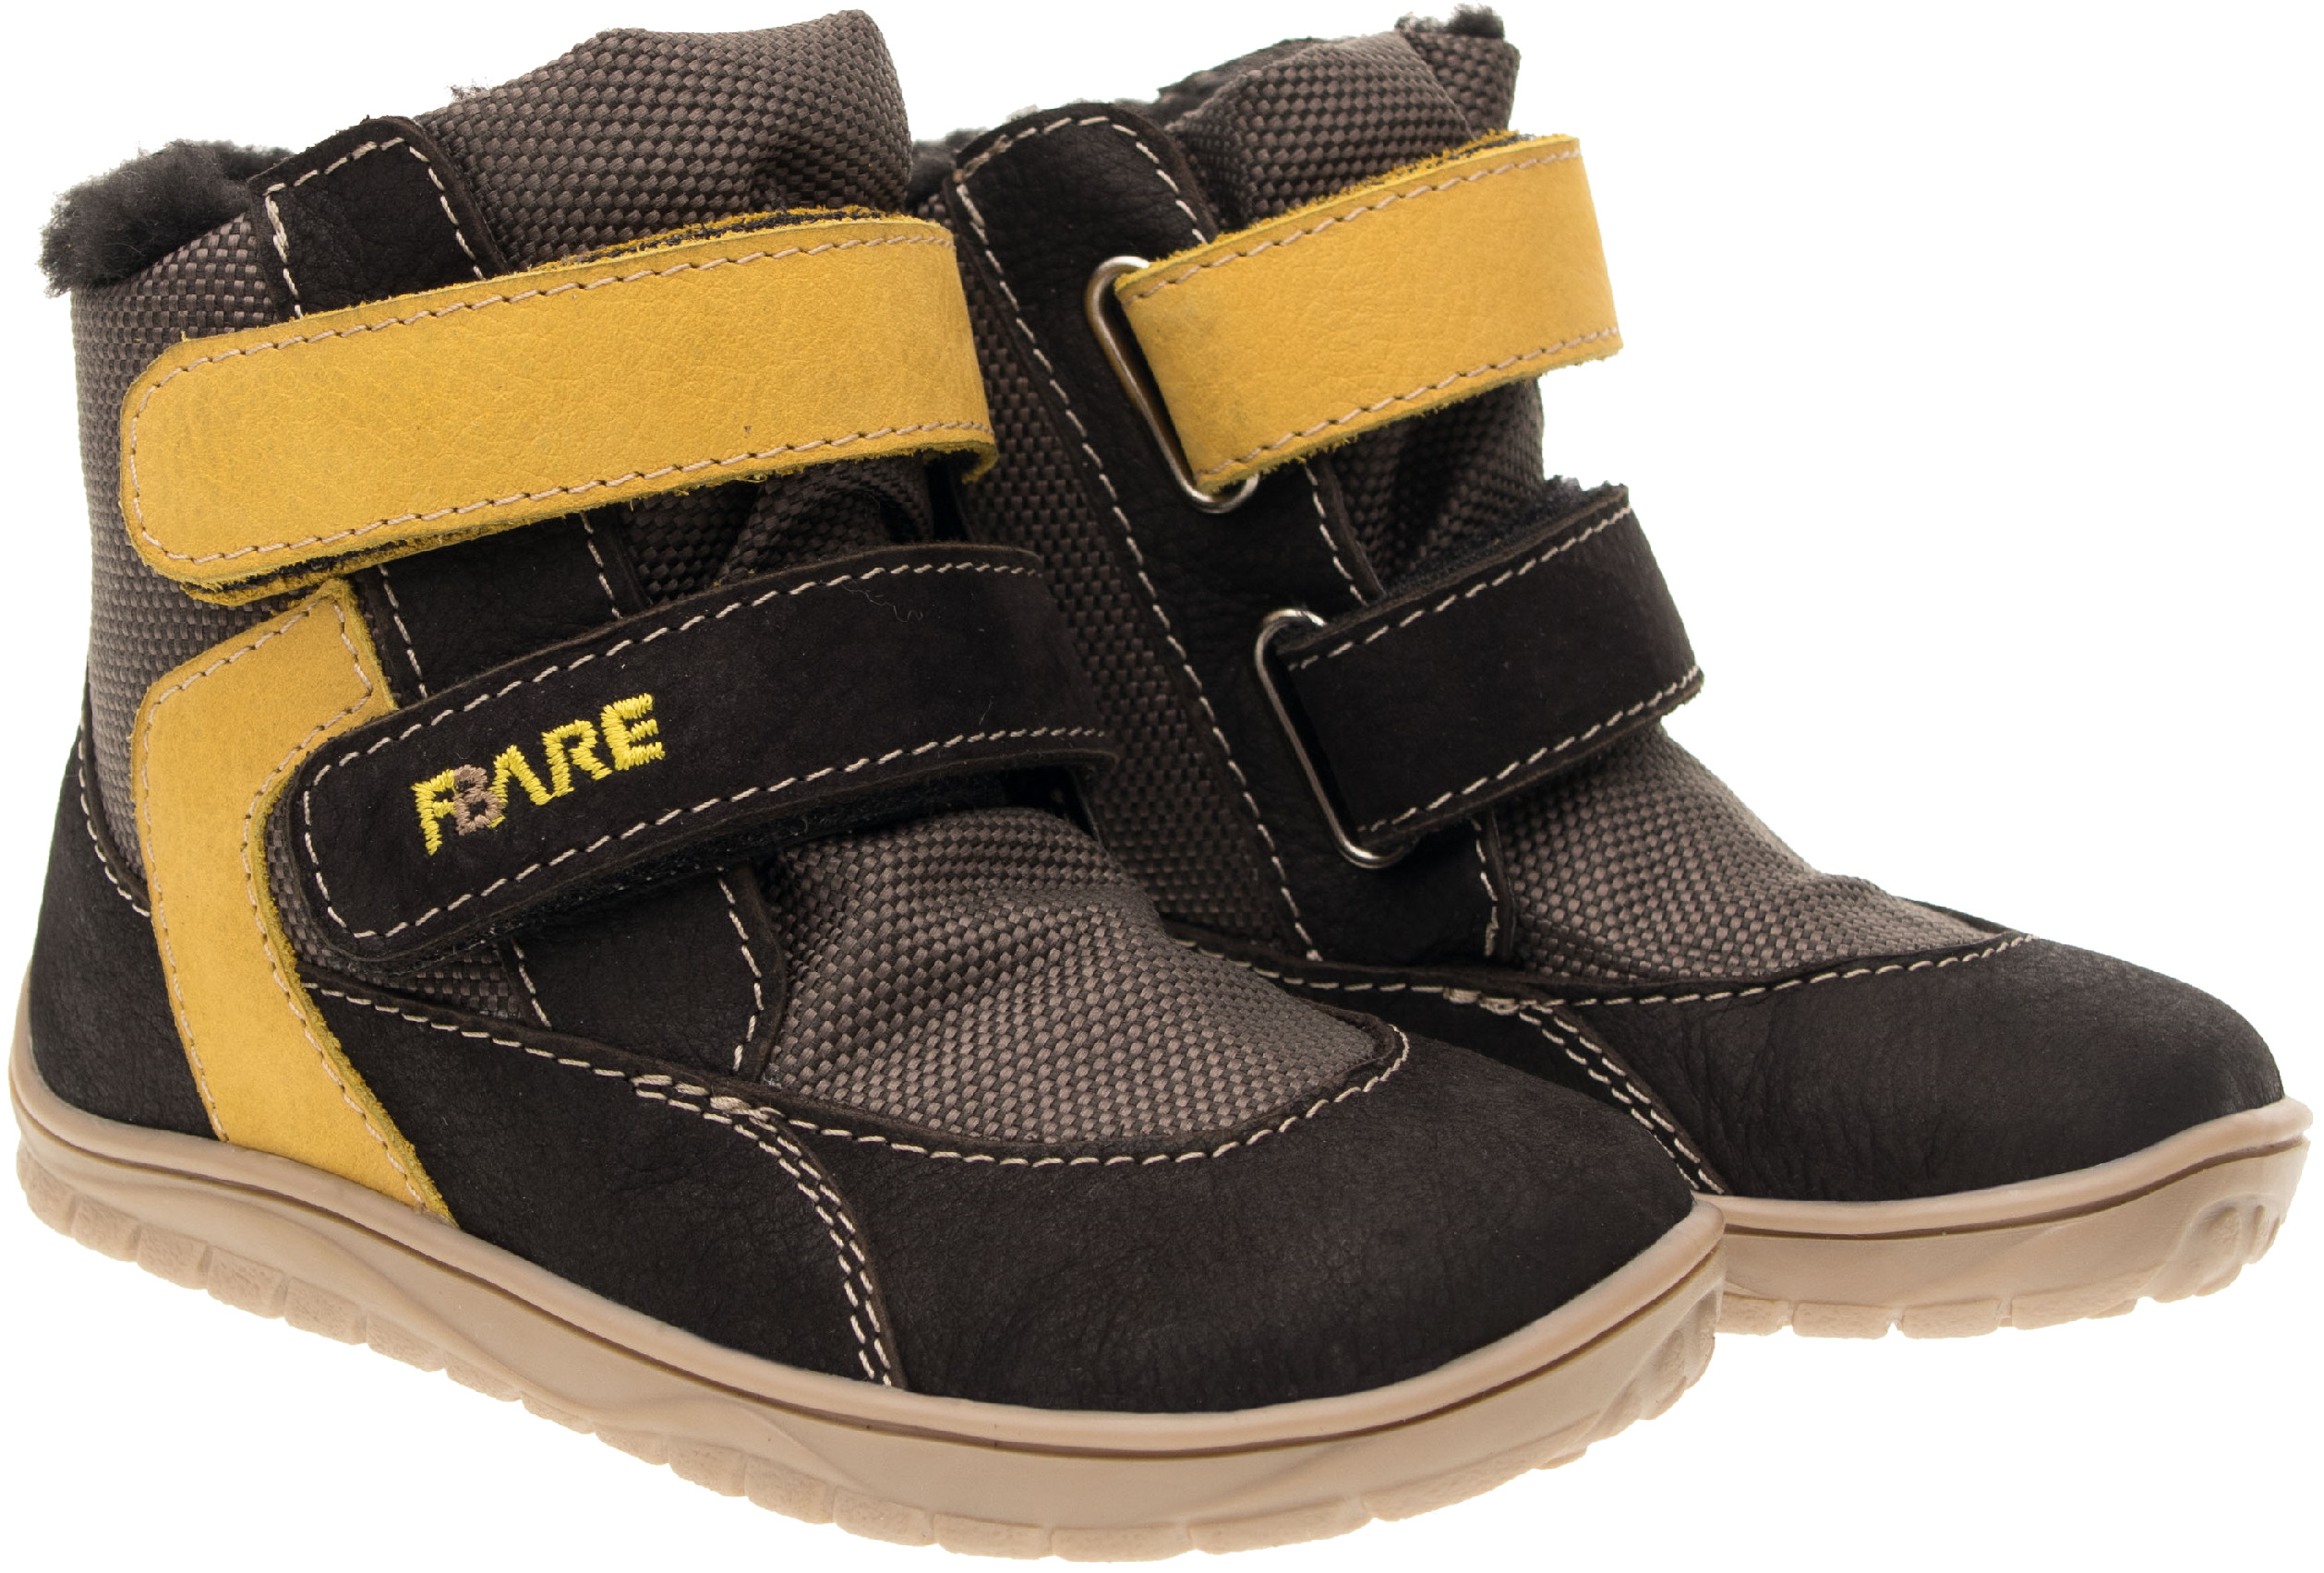 FARE BARE zimní obuv B5544211 Velikost: 27